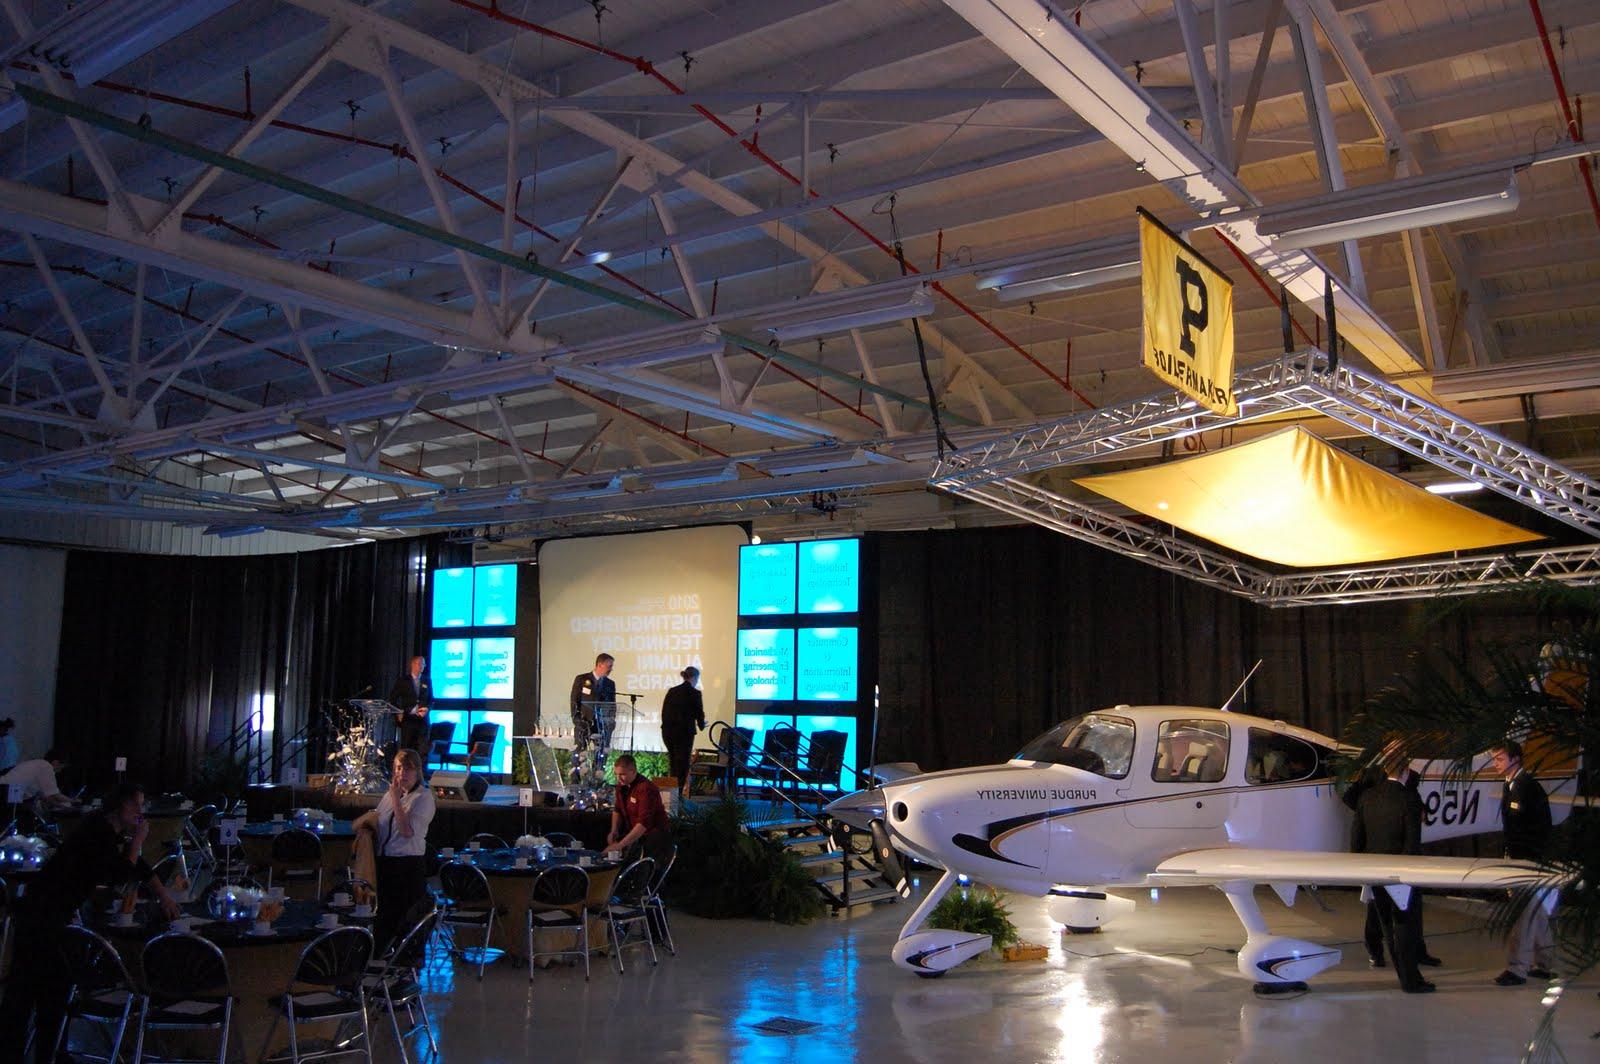 The decor included an aircraft